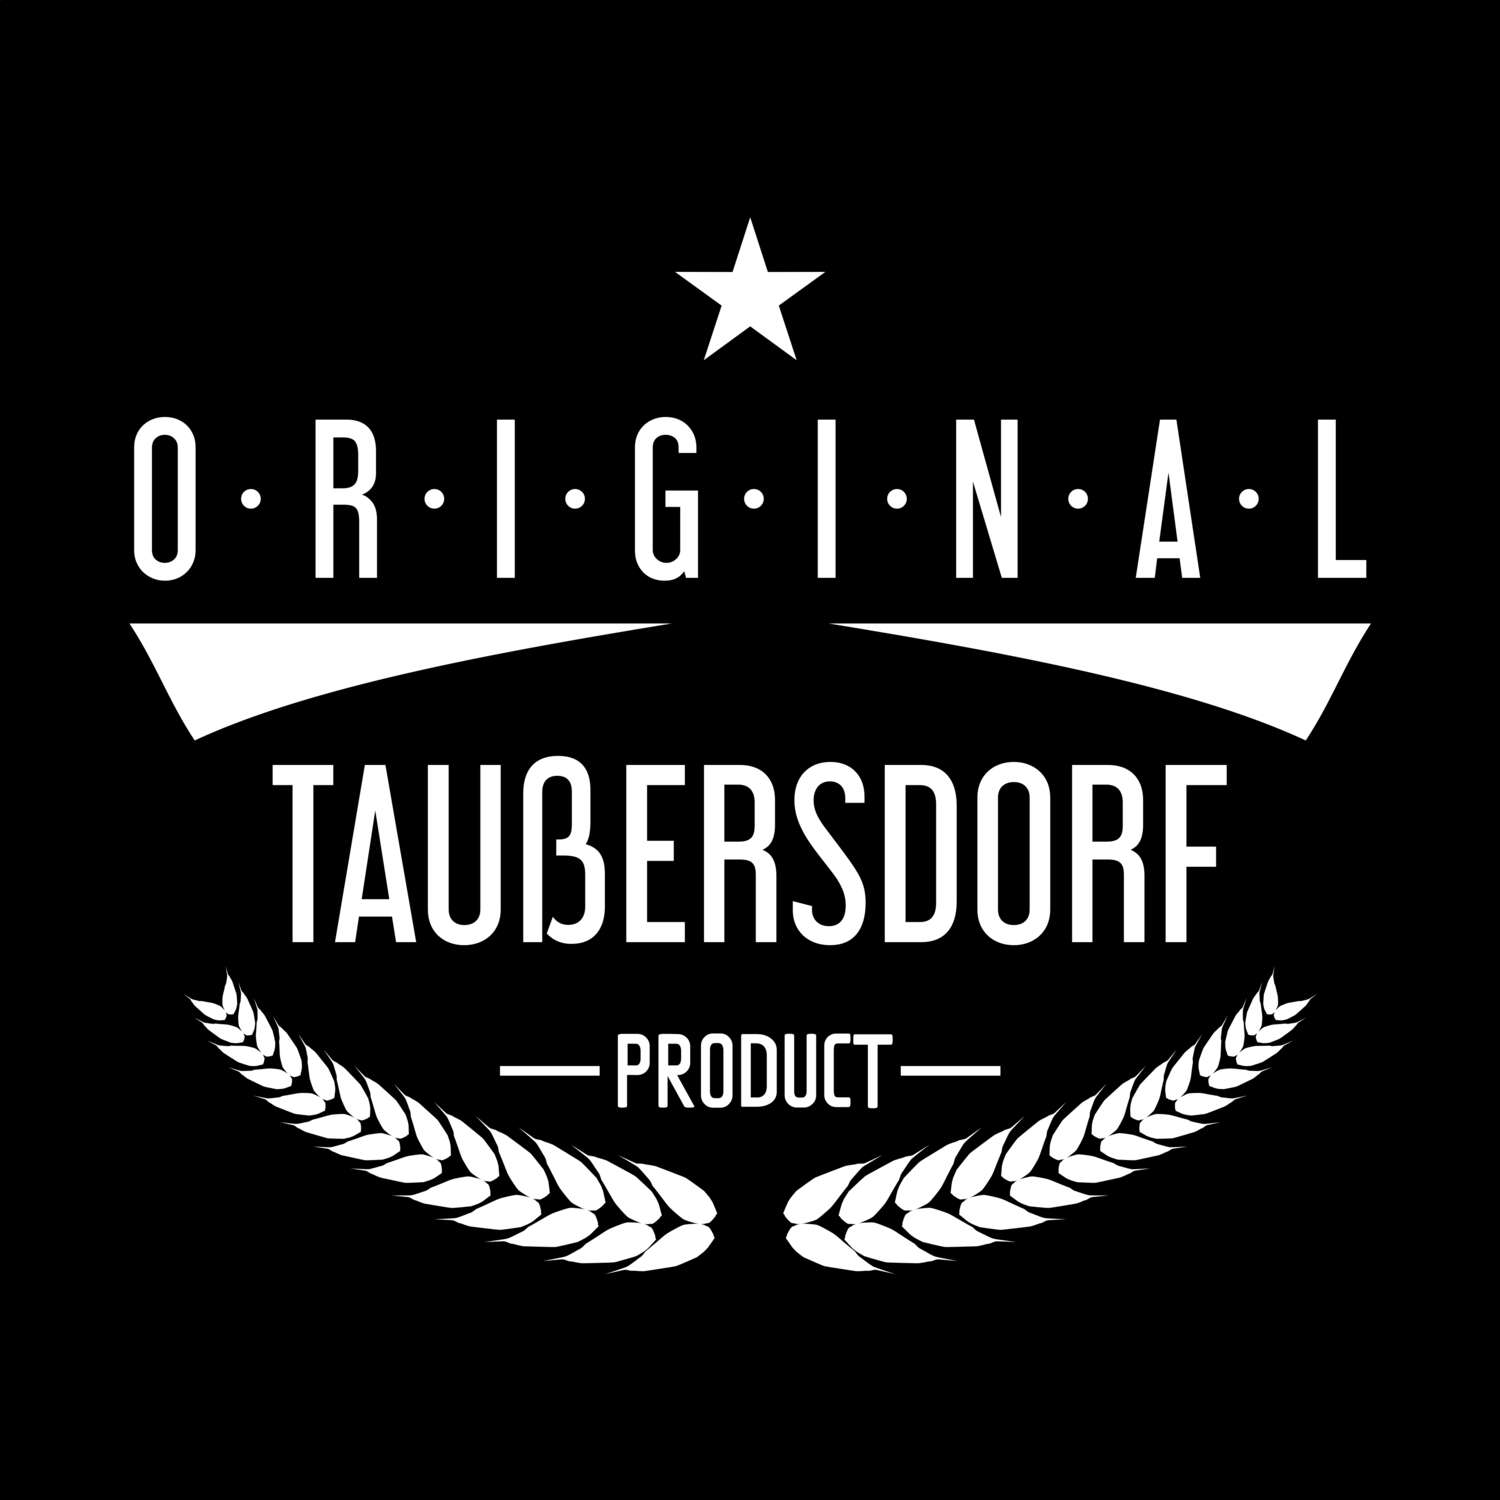 Taußersdorf T-Shirt »Original Product«